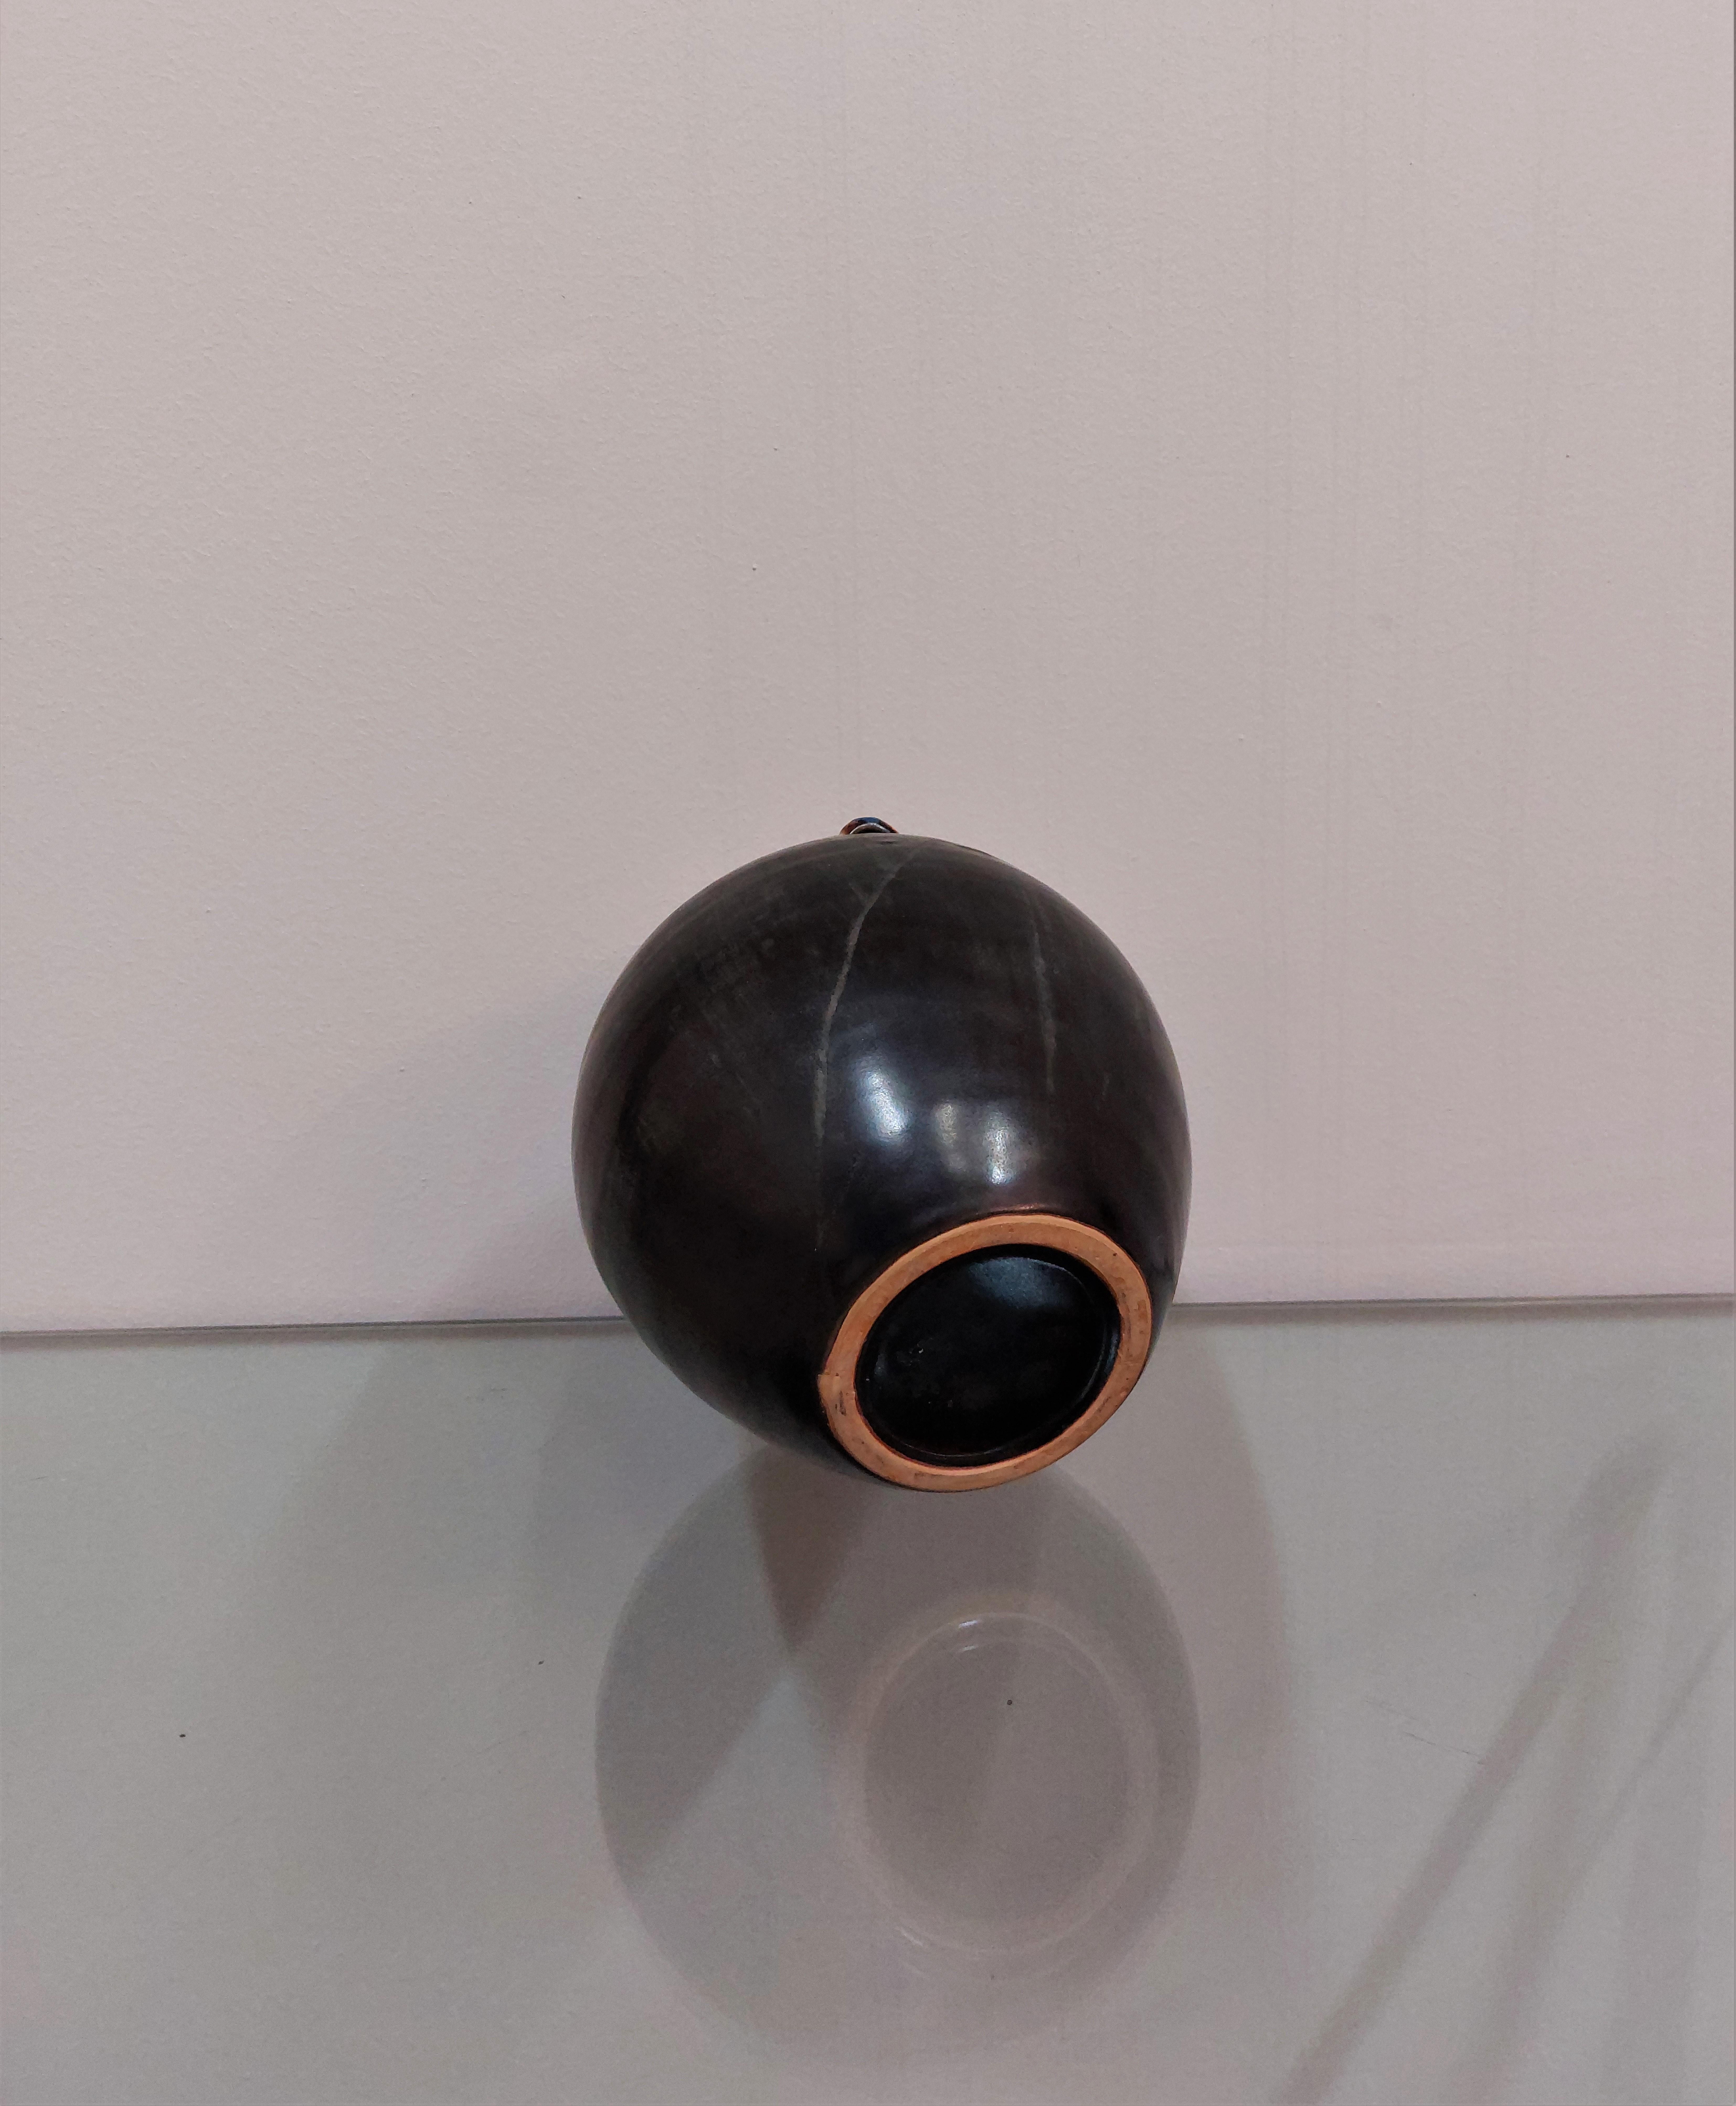 Decorative Object Ceramic Vase Enameled Black Midcentury Italian Design 1950s For Sale 3